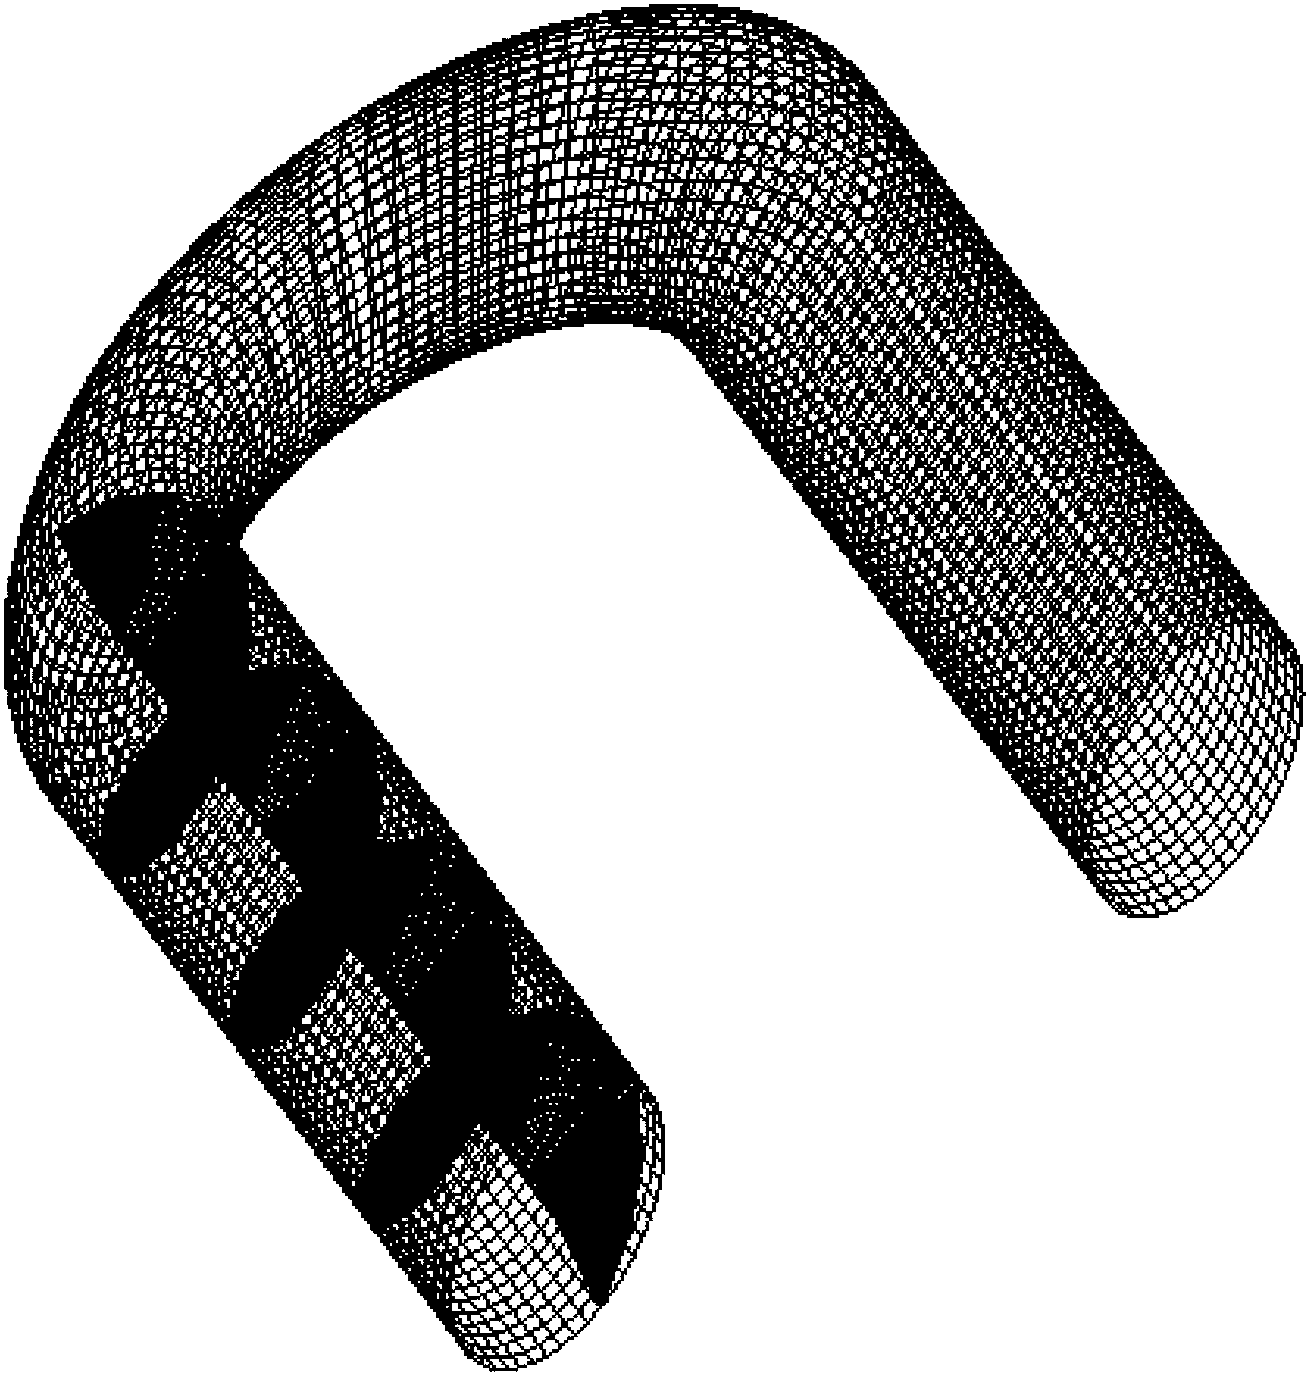 Spiral flow type anti-deposition reverse U-shaped pipe